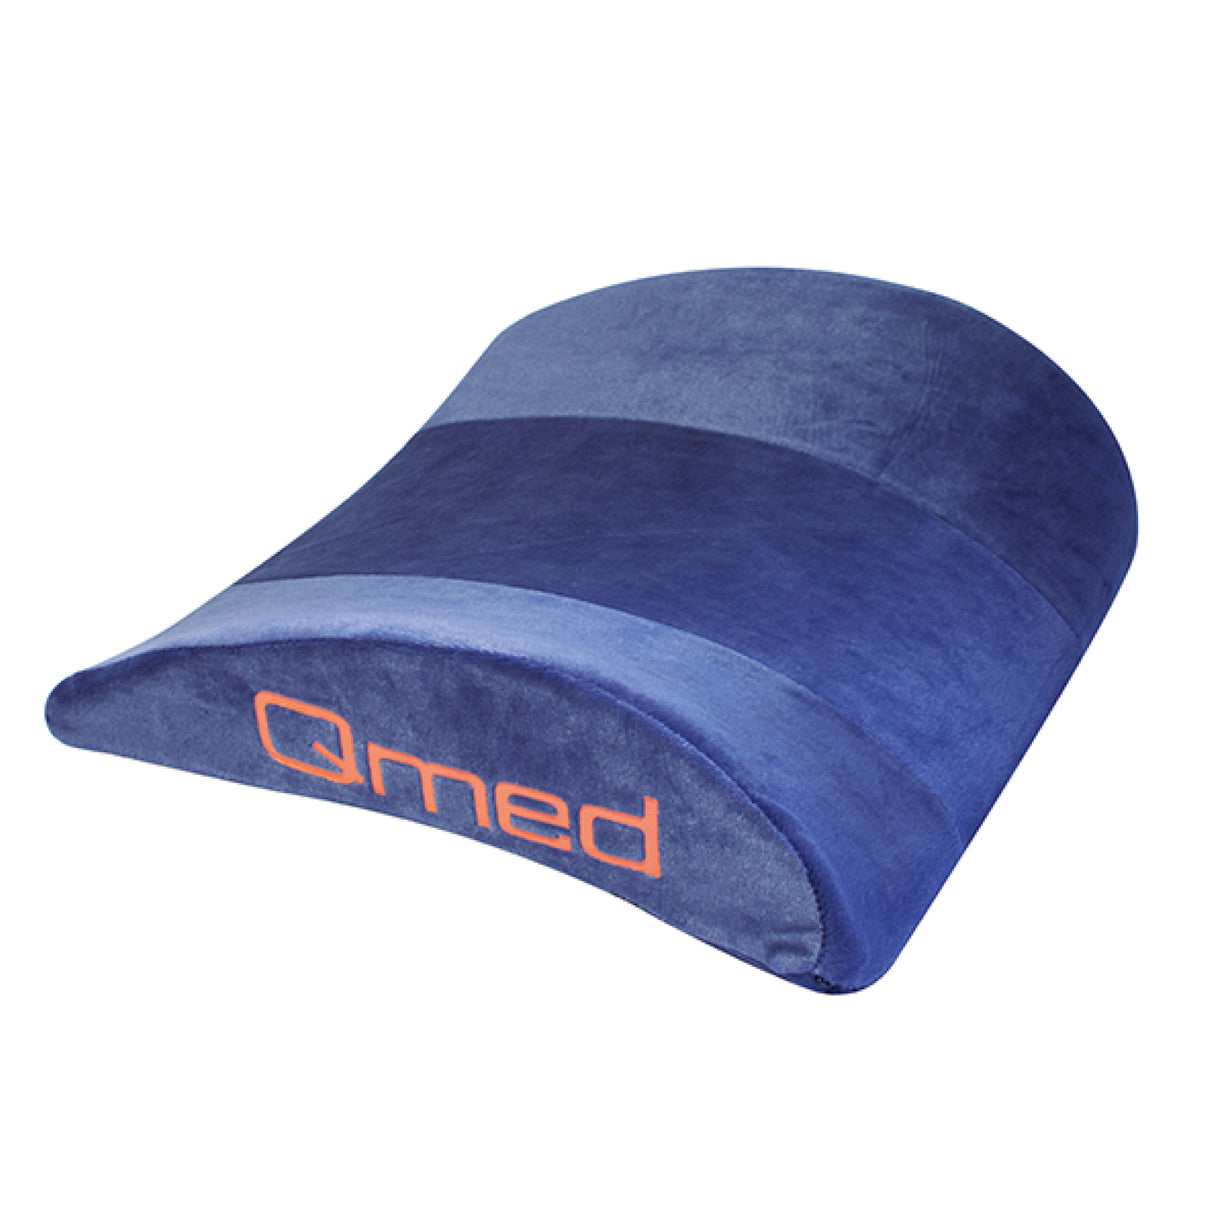 QMED LUMBAR | Orthopedic pillow for the back